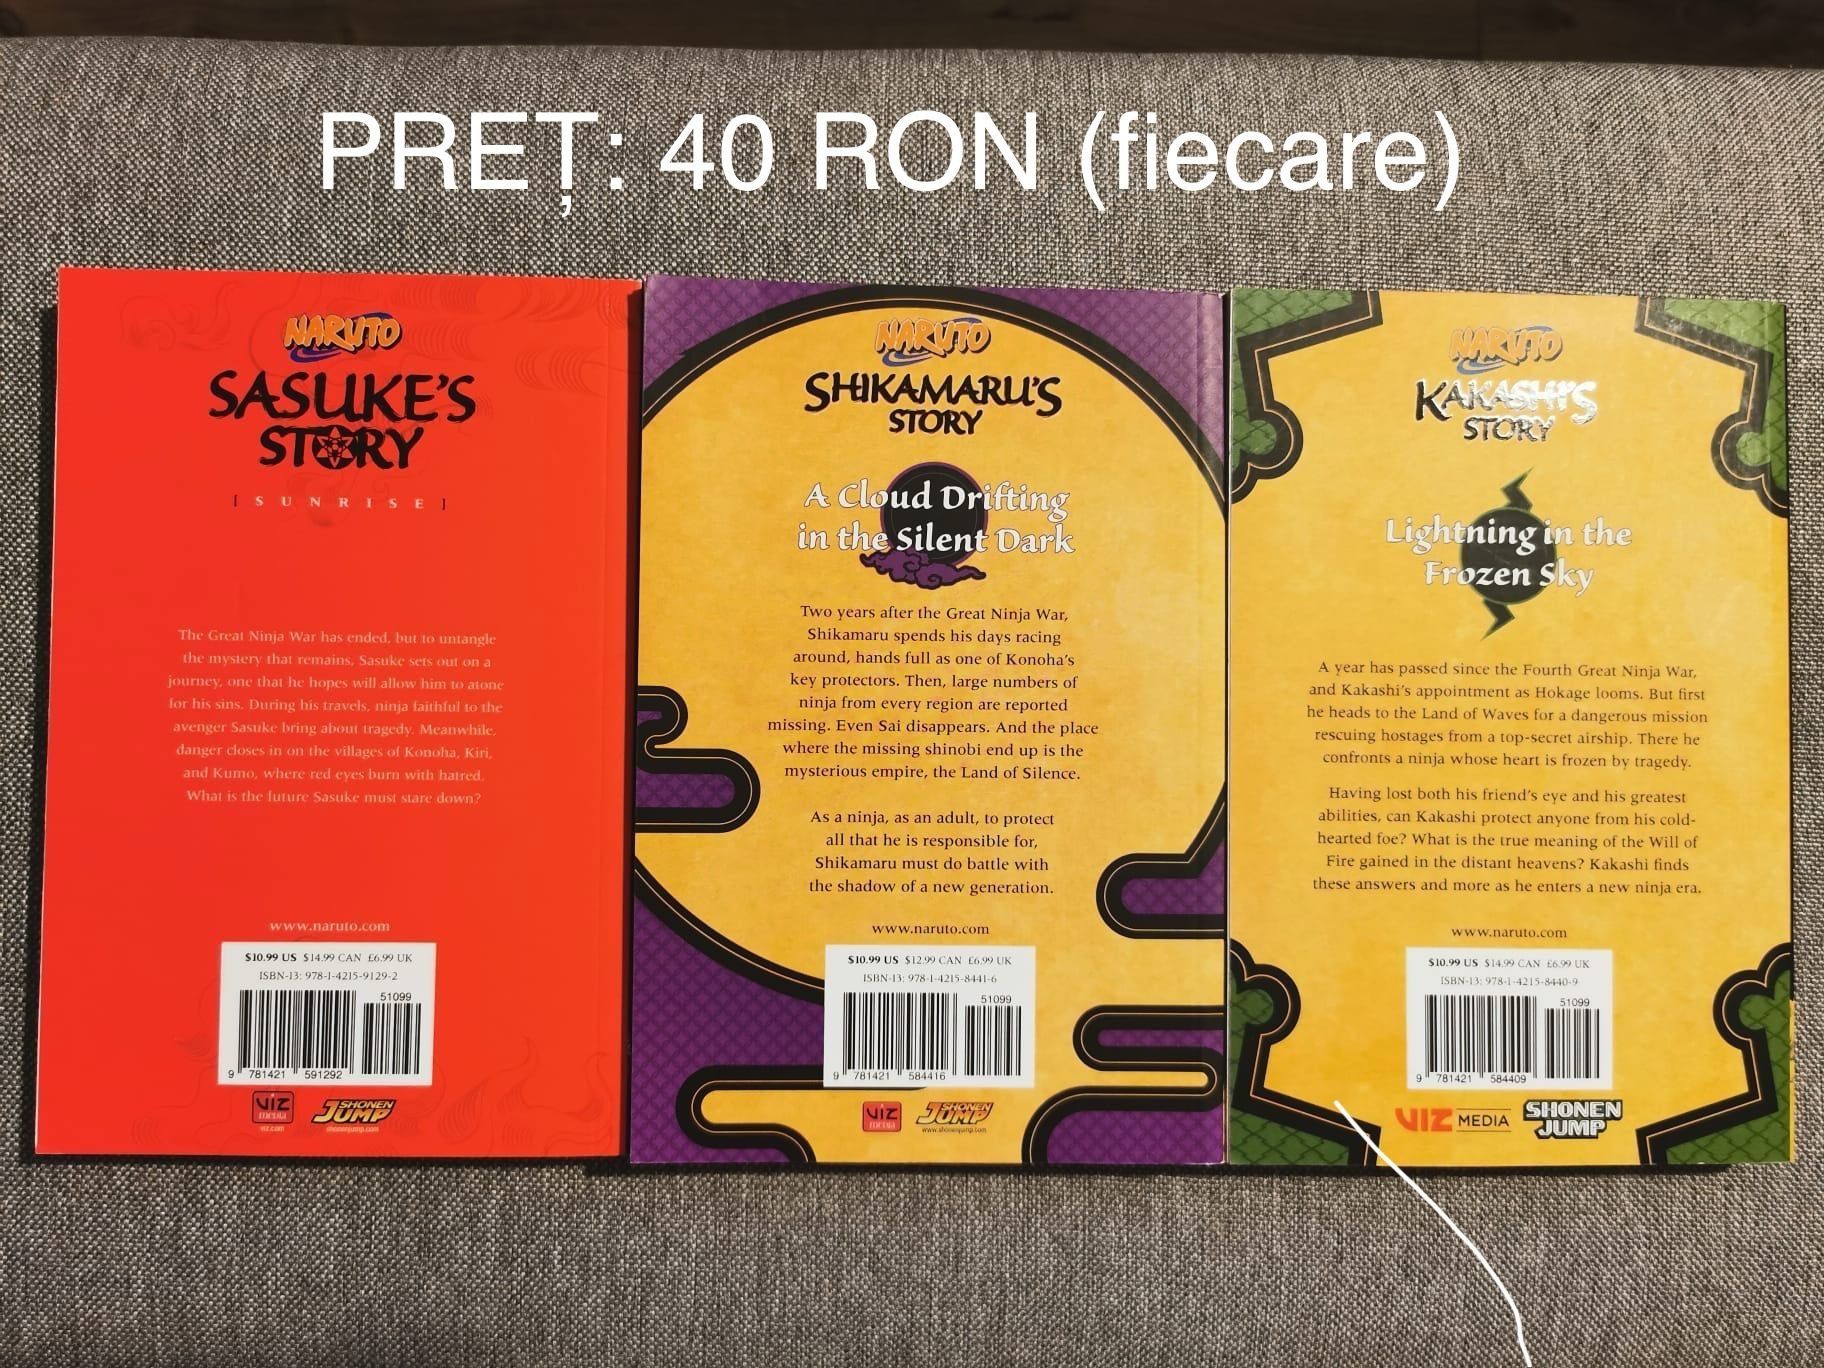 Colecție Naruto preț 40 lei fiecare carte